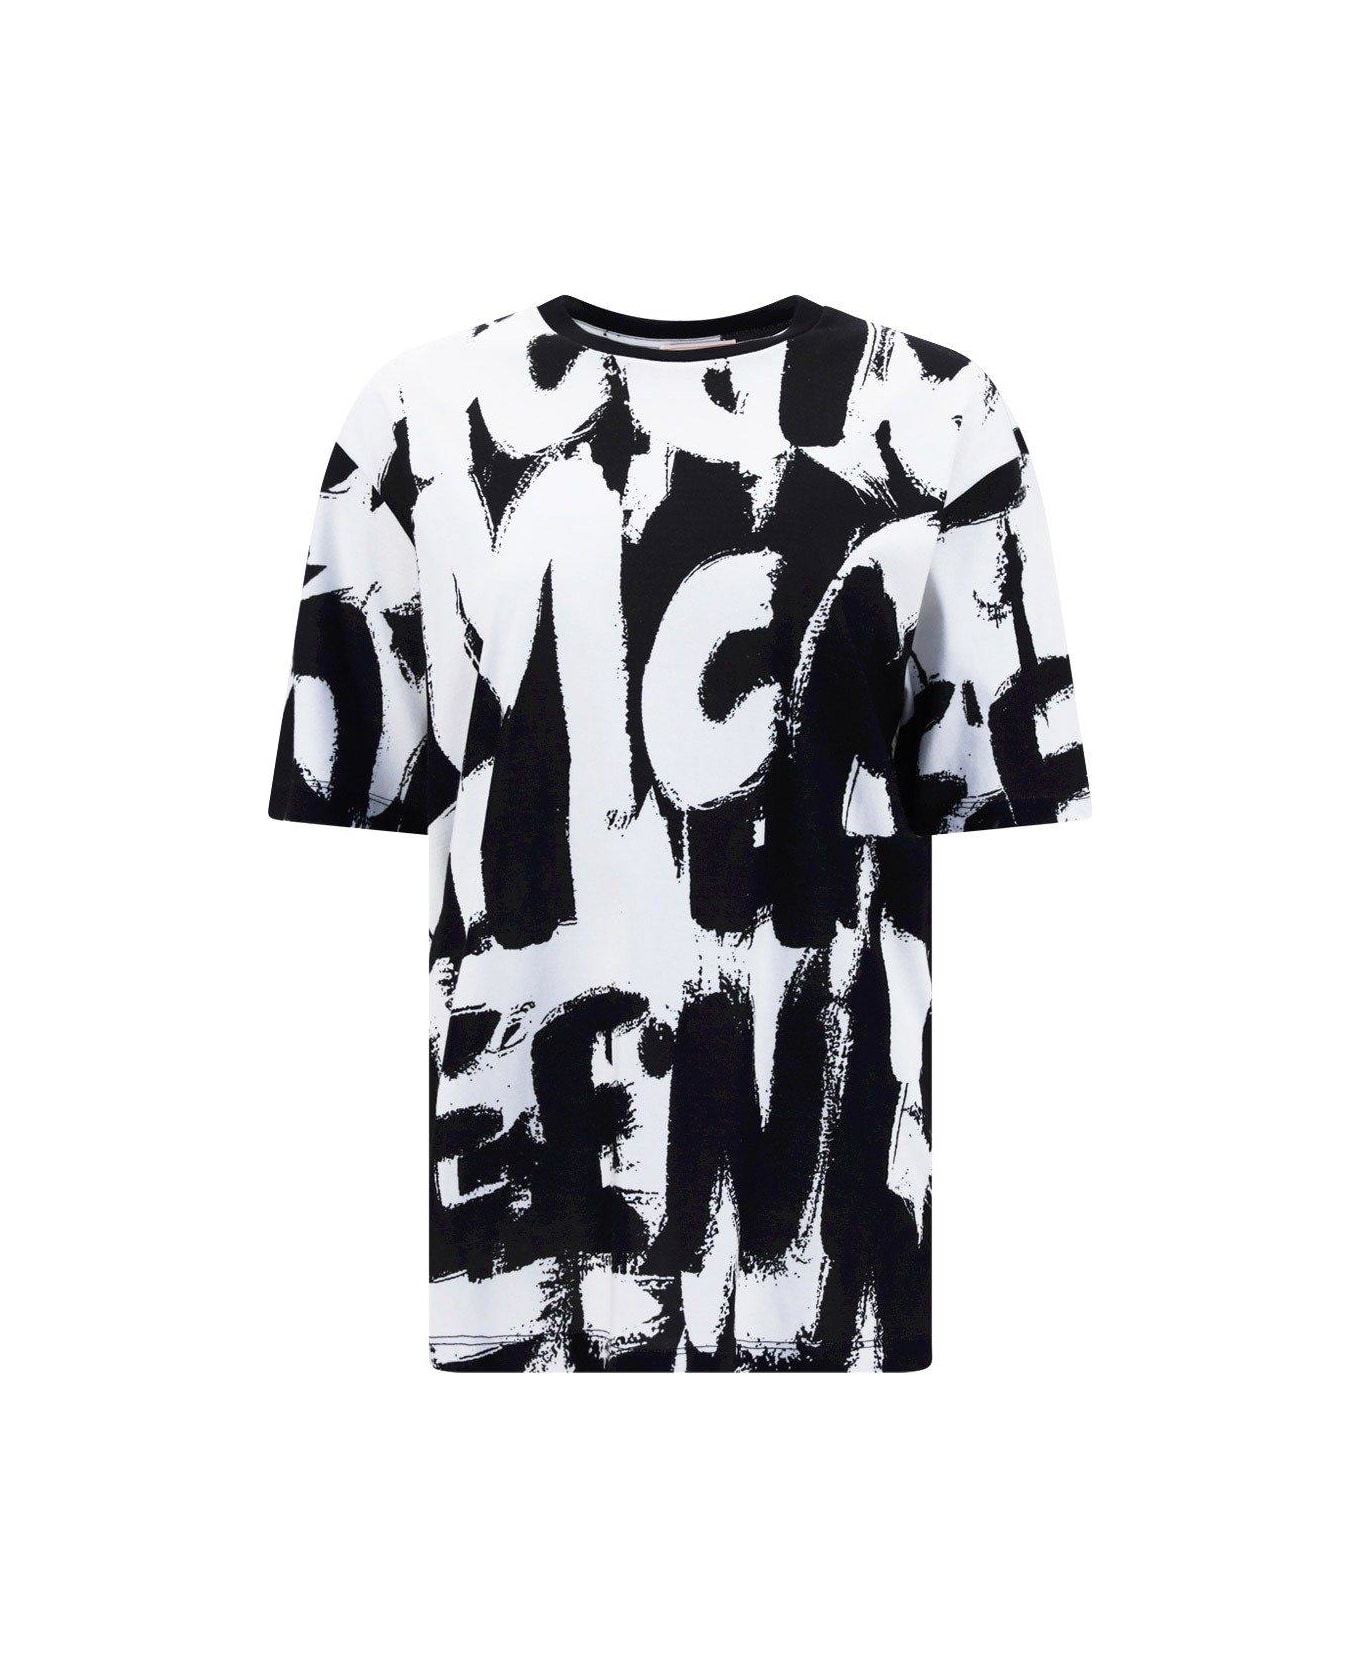 Alexander McQueen Graphic Printed Crewneck T-shirt - White